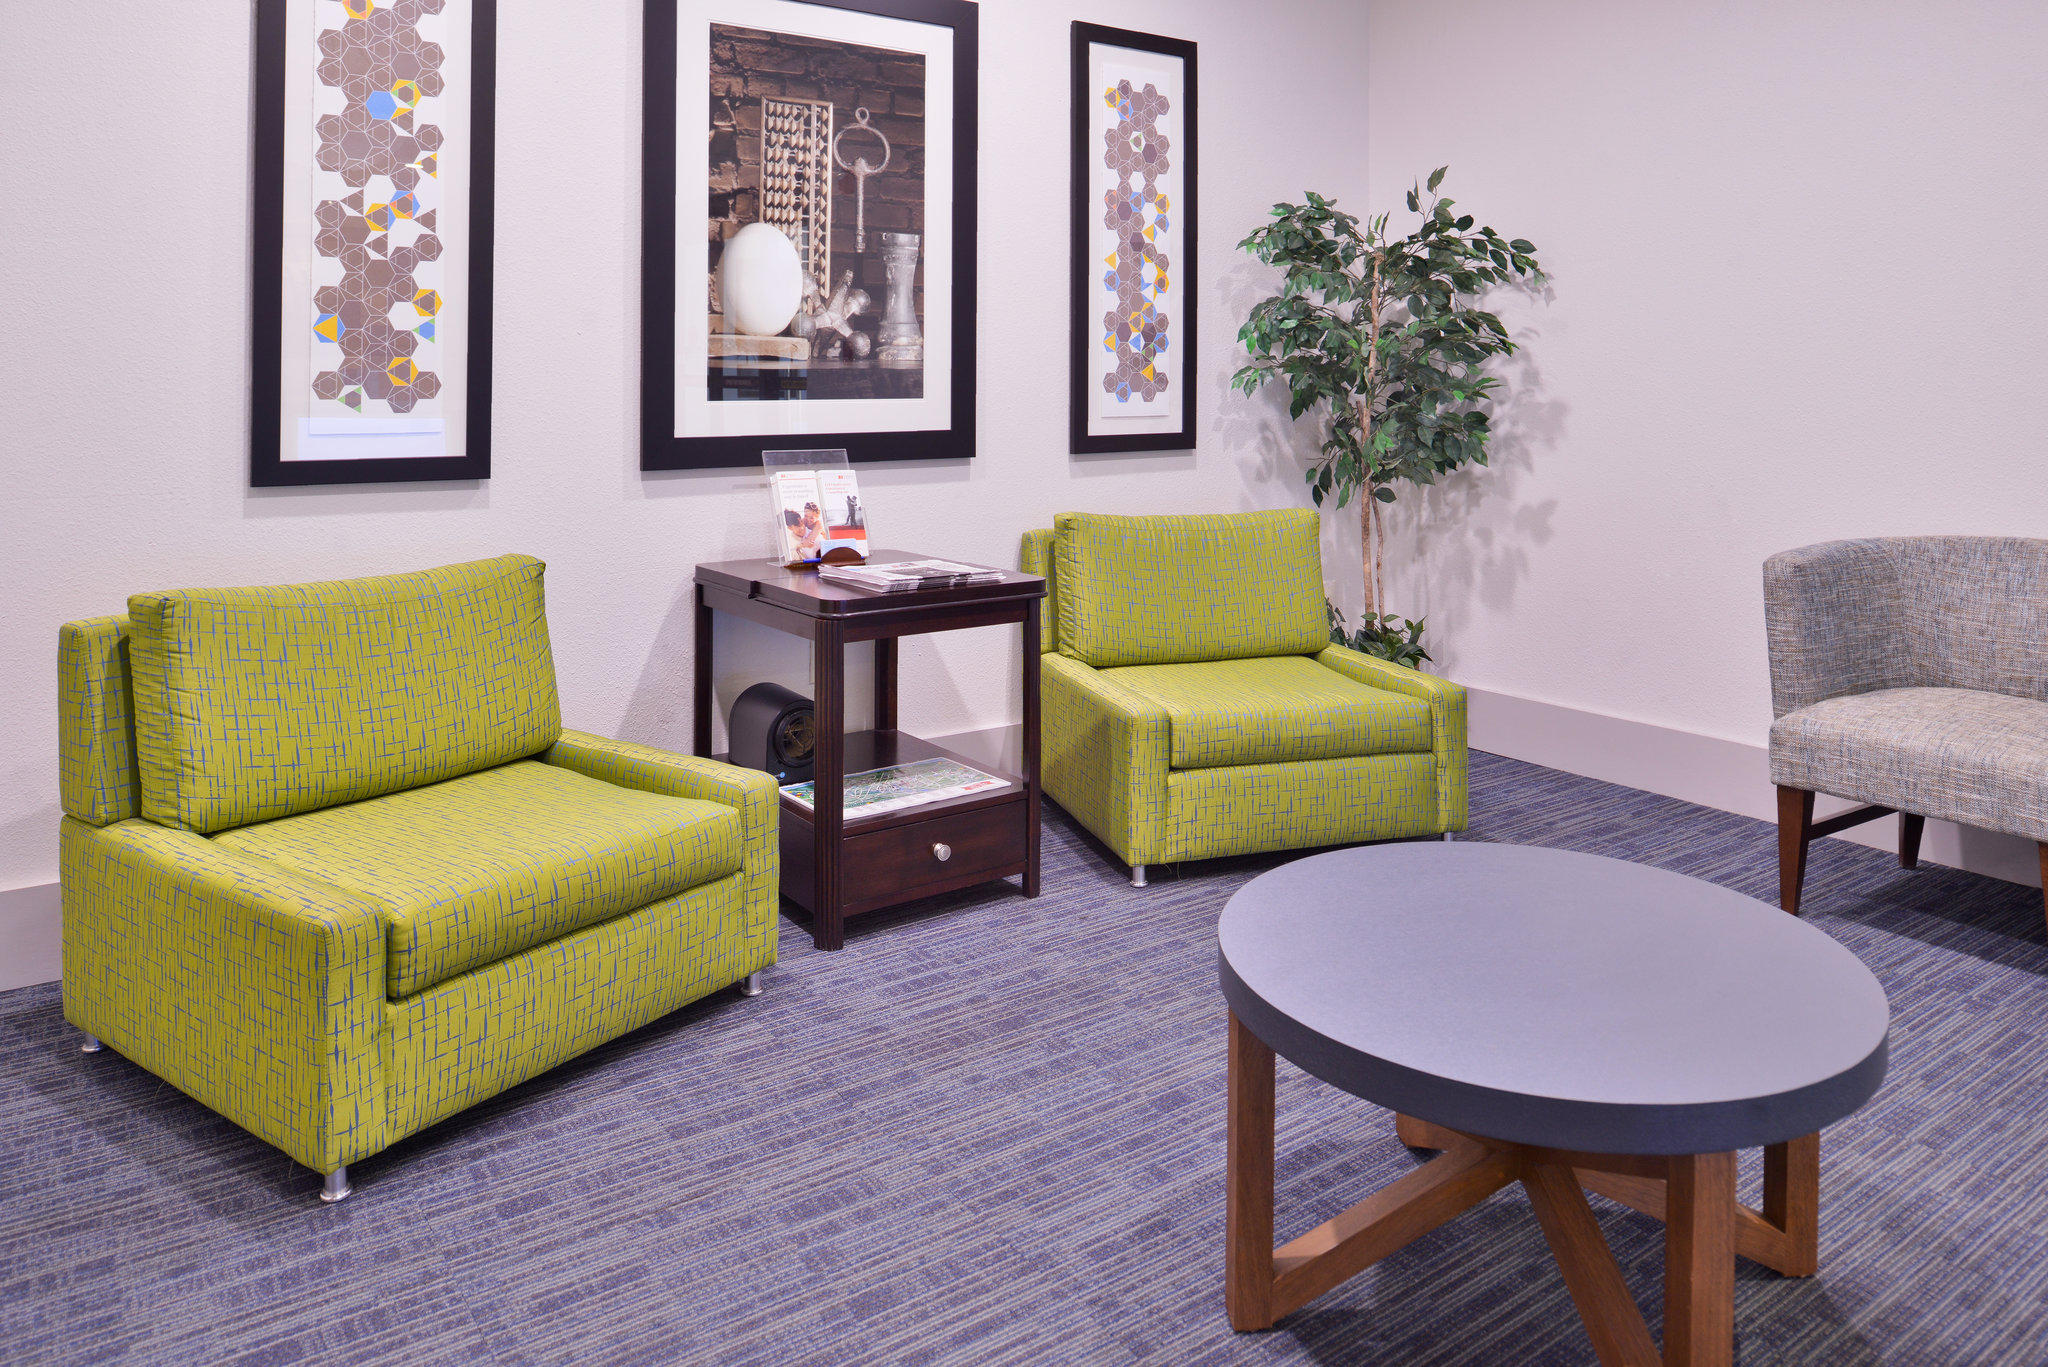 Holiday Inn Express & Suites San Antonio NW-Medical Area Photo